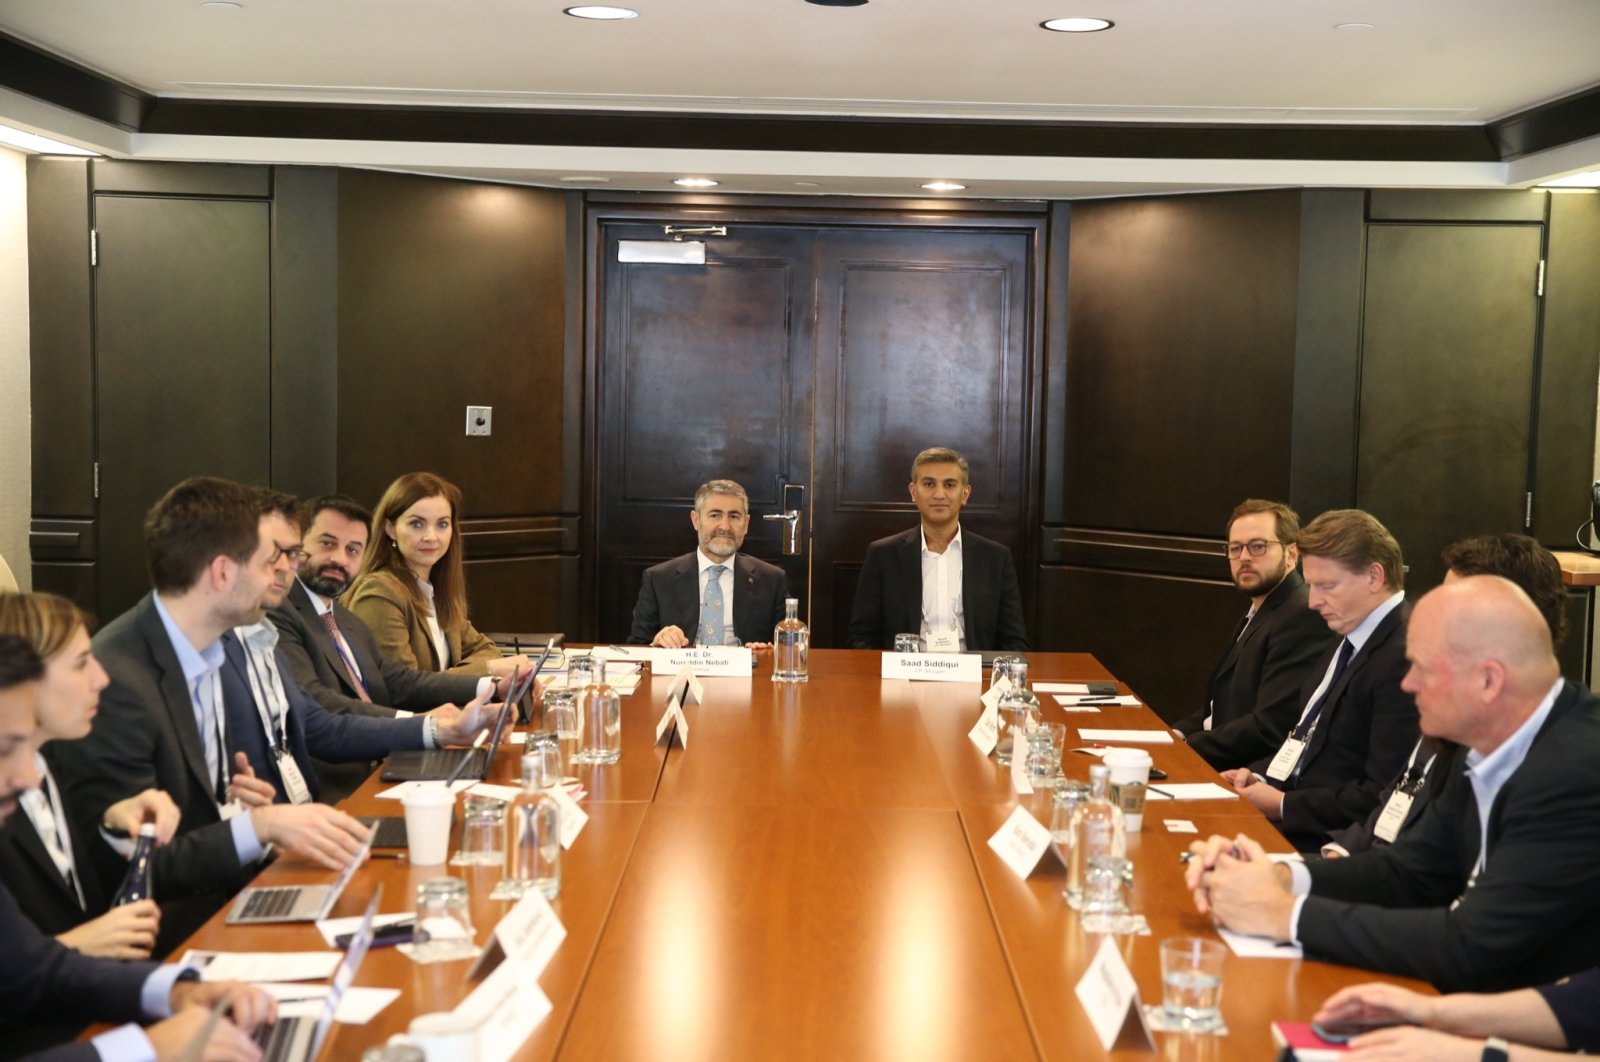 Treasury and Finance Minister Nureddin Nebati meets with portfolio investors in Washington, U.S., April 21, 2022. (Photo: @NureddinNebati)